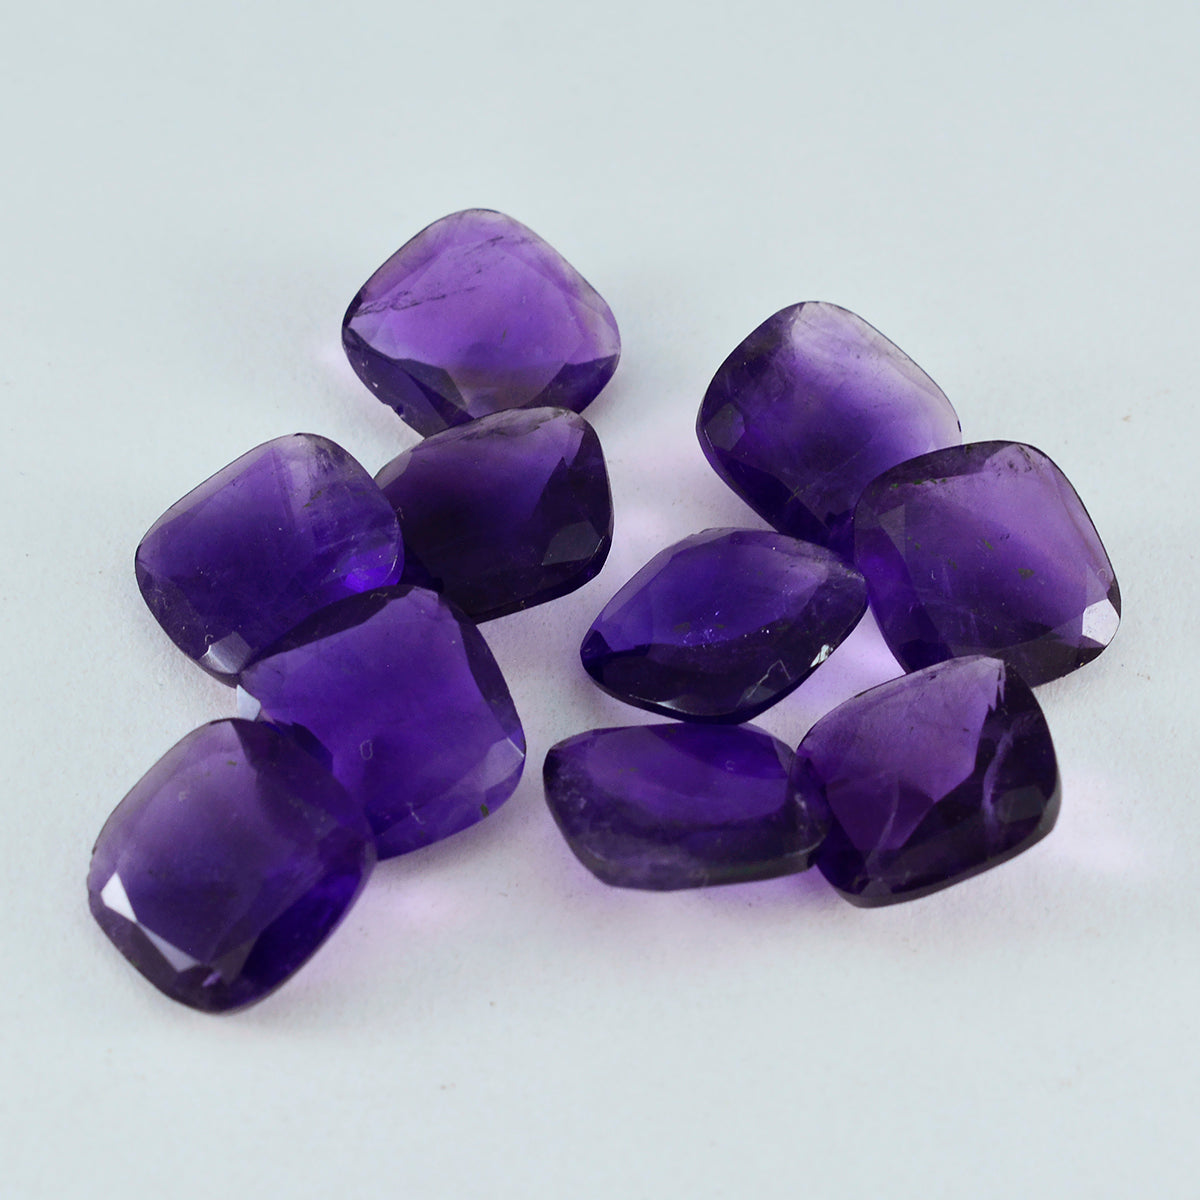 Riyogems 1PC Real Purple Amethyst Faceted 7X7 mm Cushion Shape startling Quality Loose Gemstone